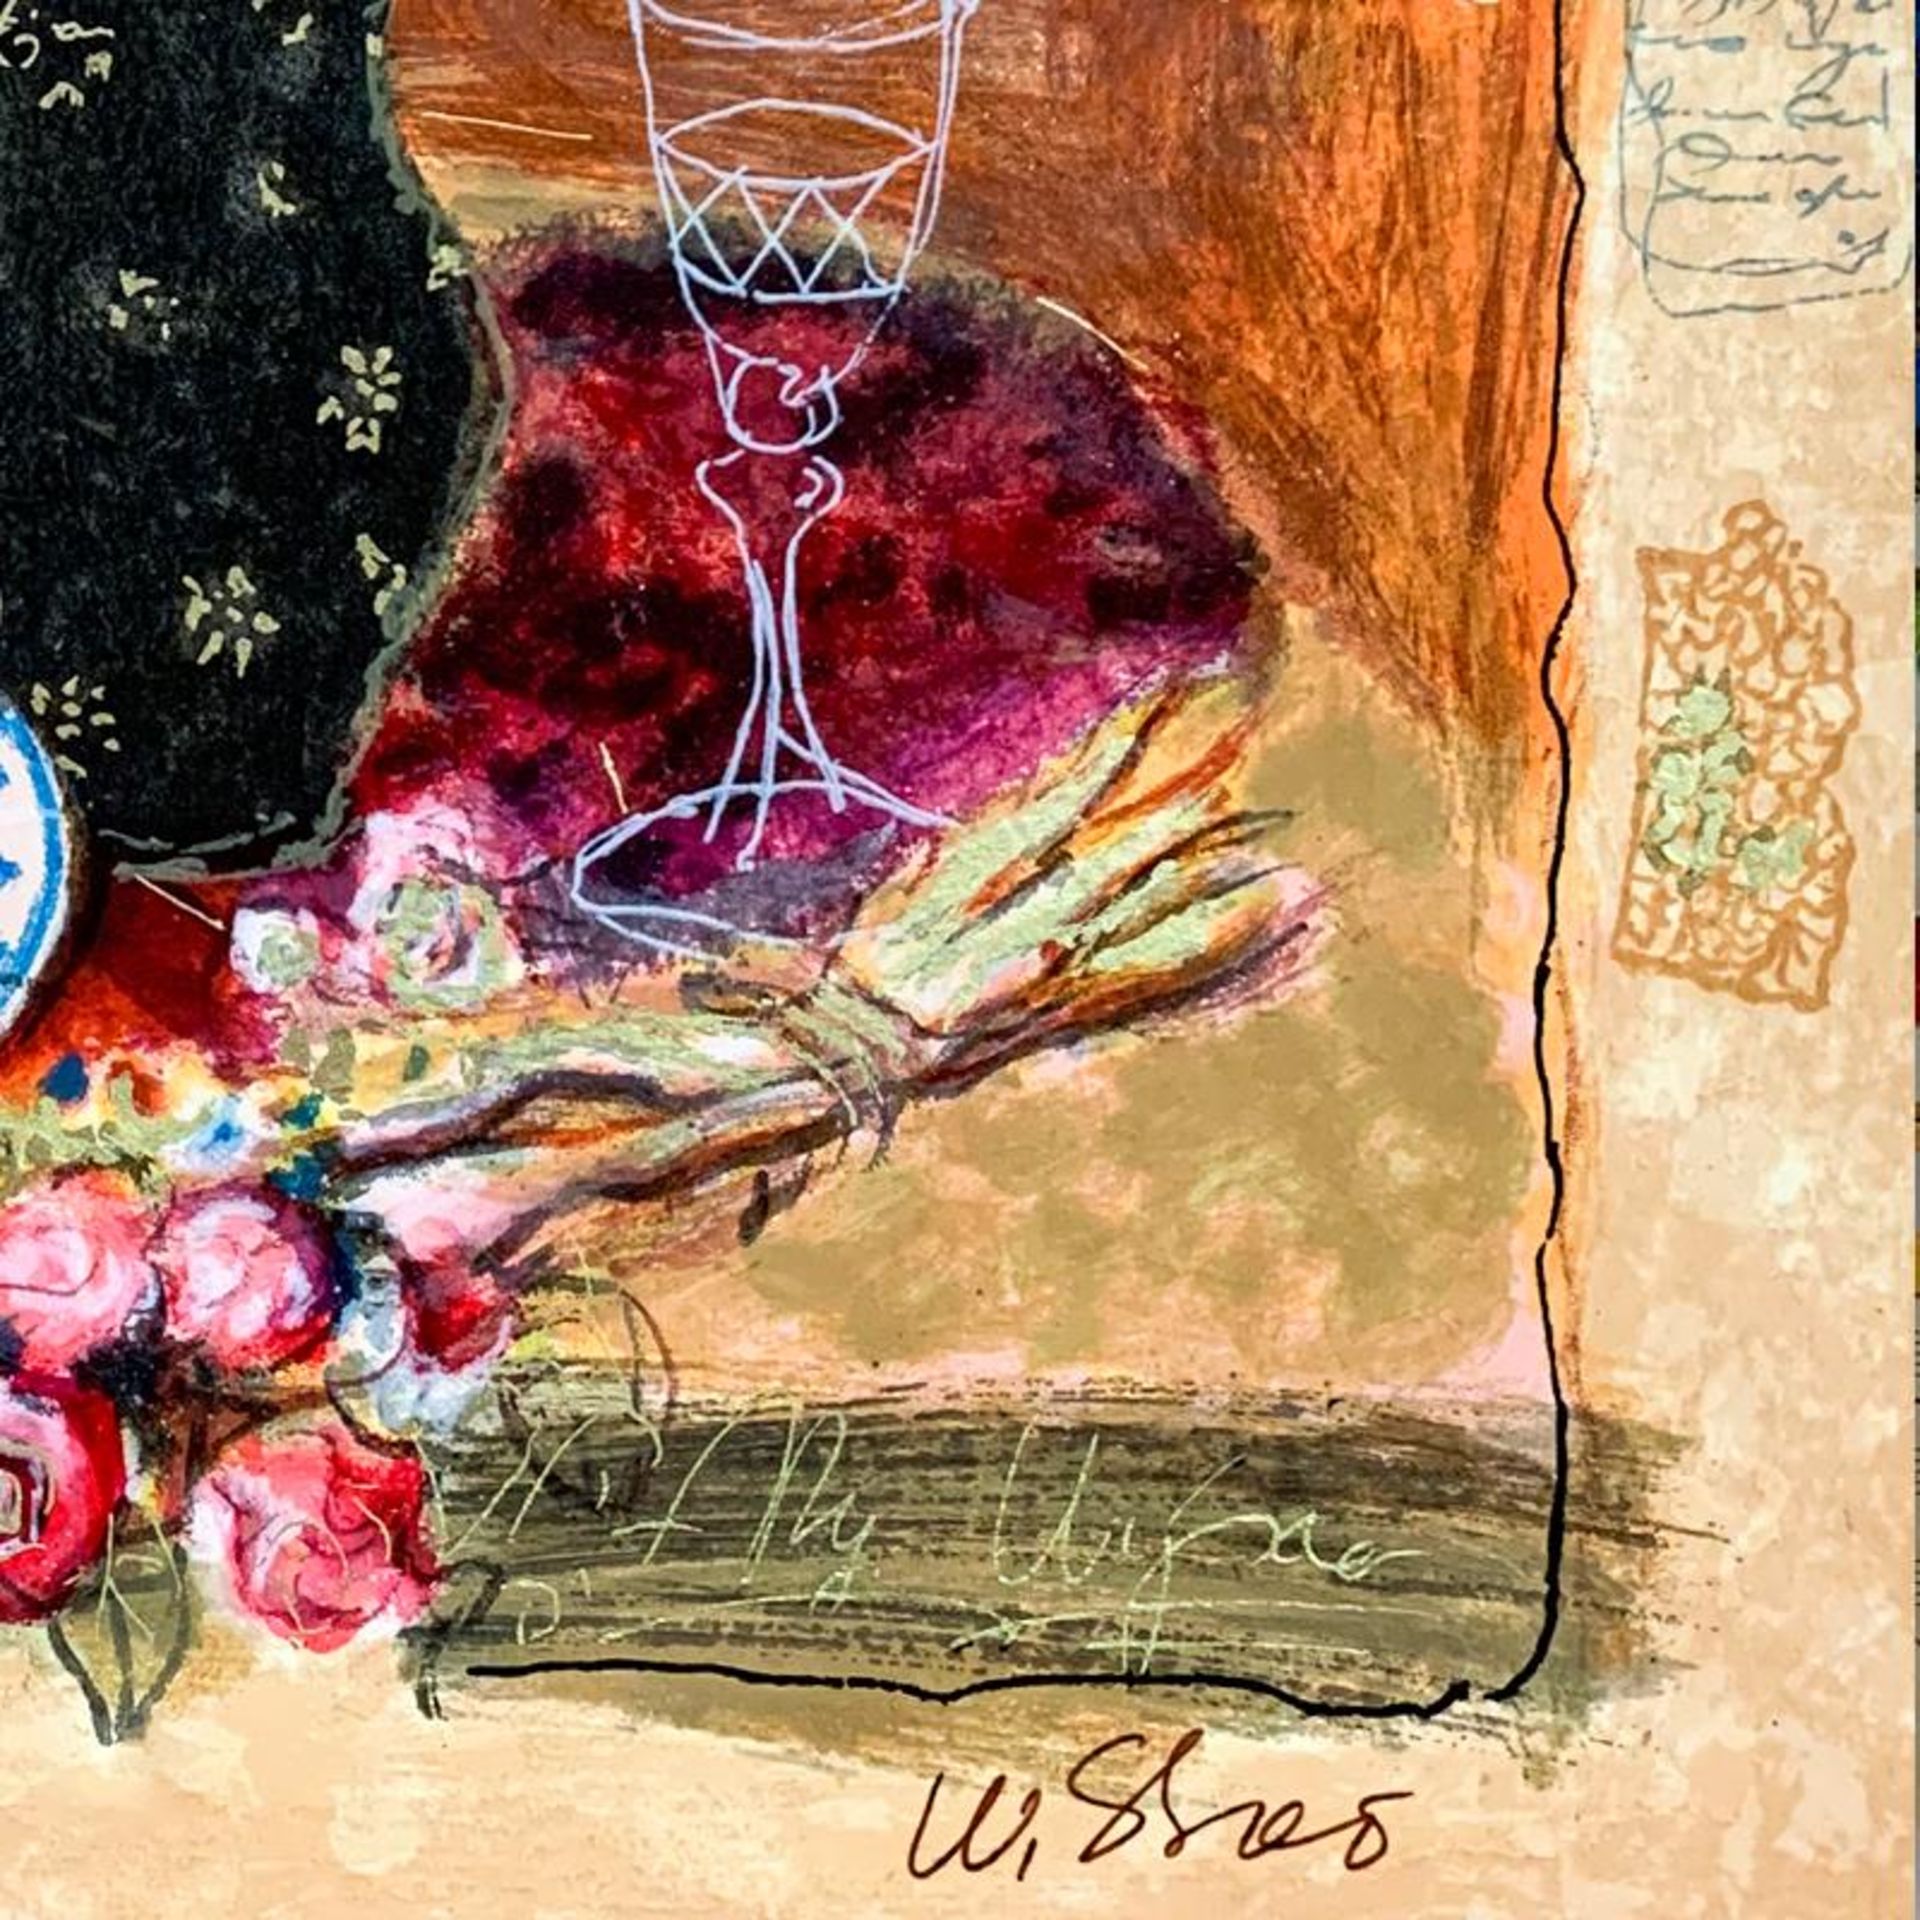 Flowers & Fruit II by Alexander & Wissotzky - Image 2 of 3